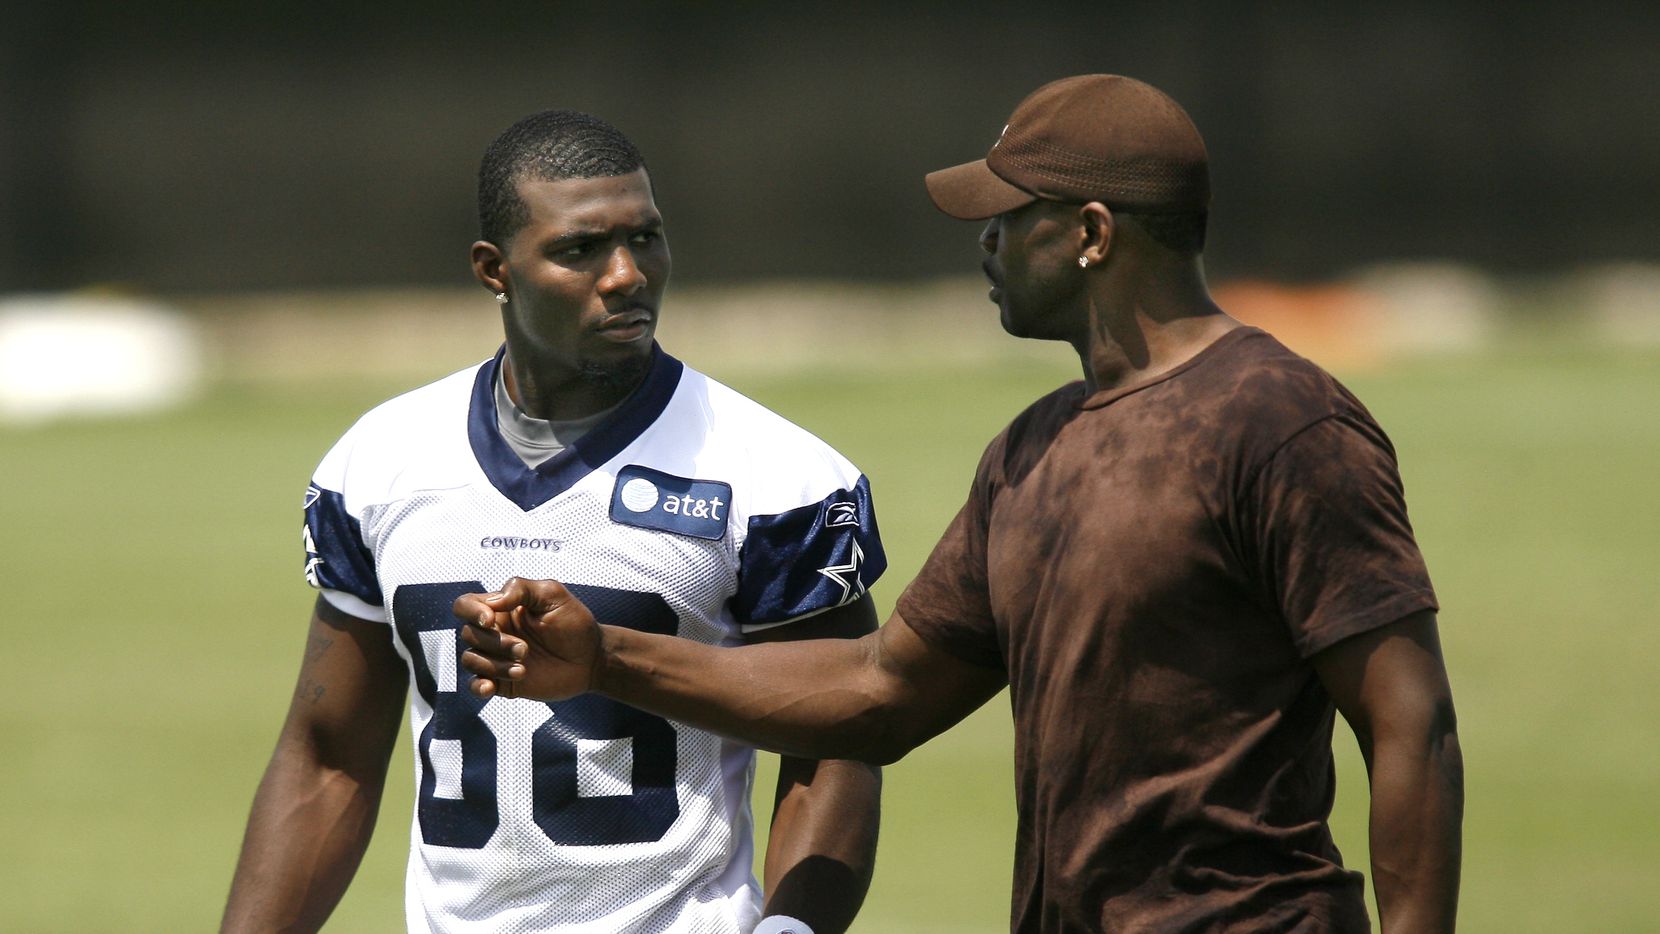 Dallas Cowboys wide receiver Dez Bryant (88) talks with former Dallas Cowboys player Michael...